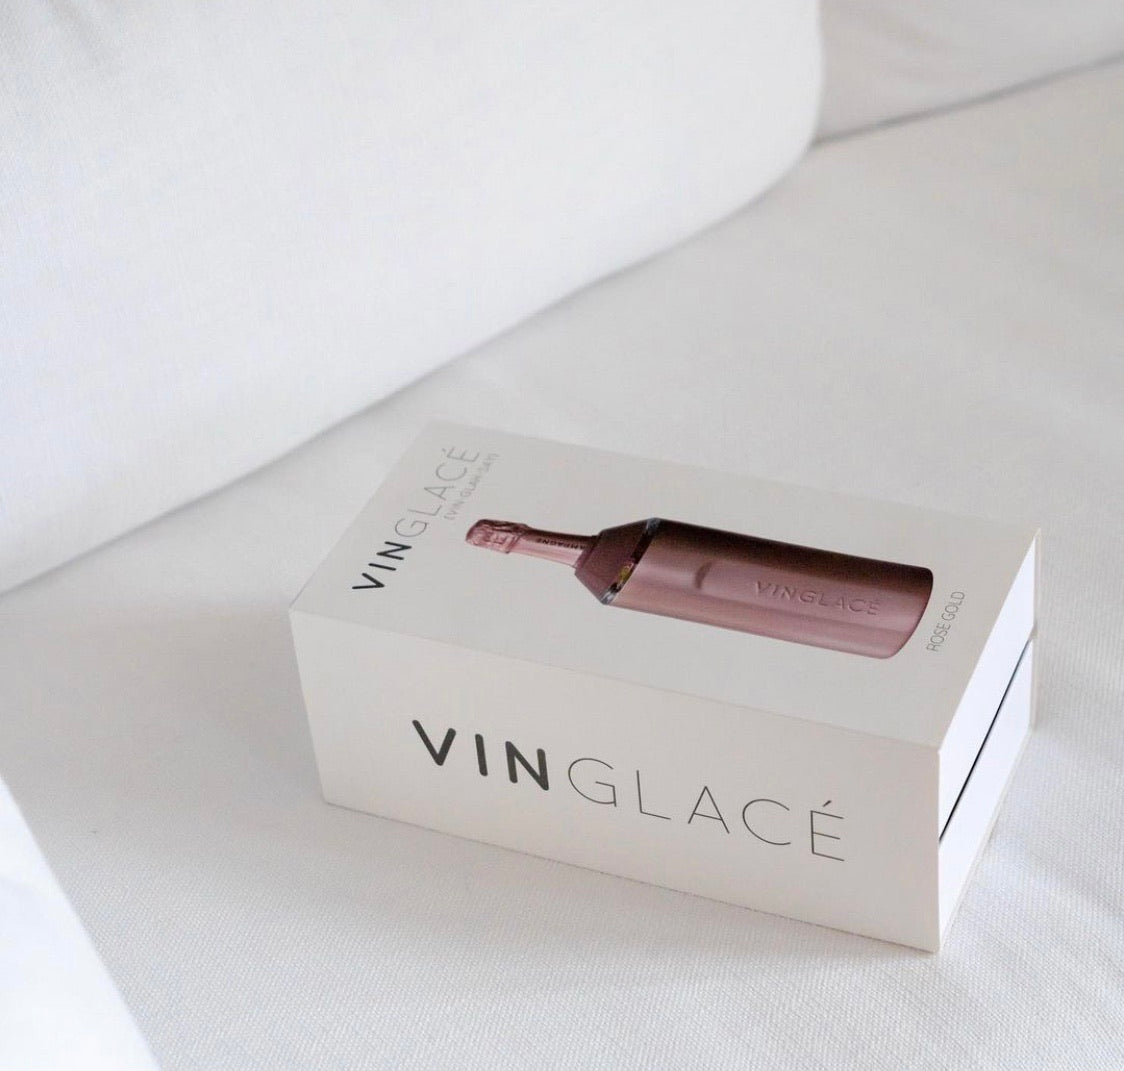 Vinglace Wine Insulator - Choice of Colors